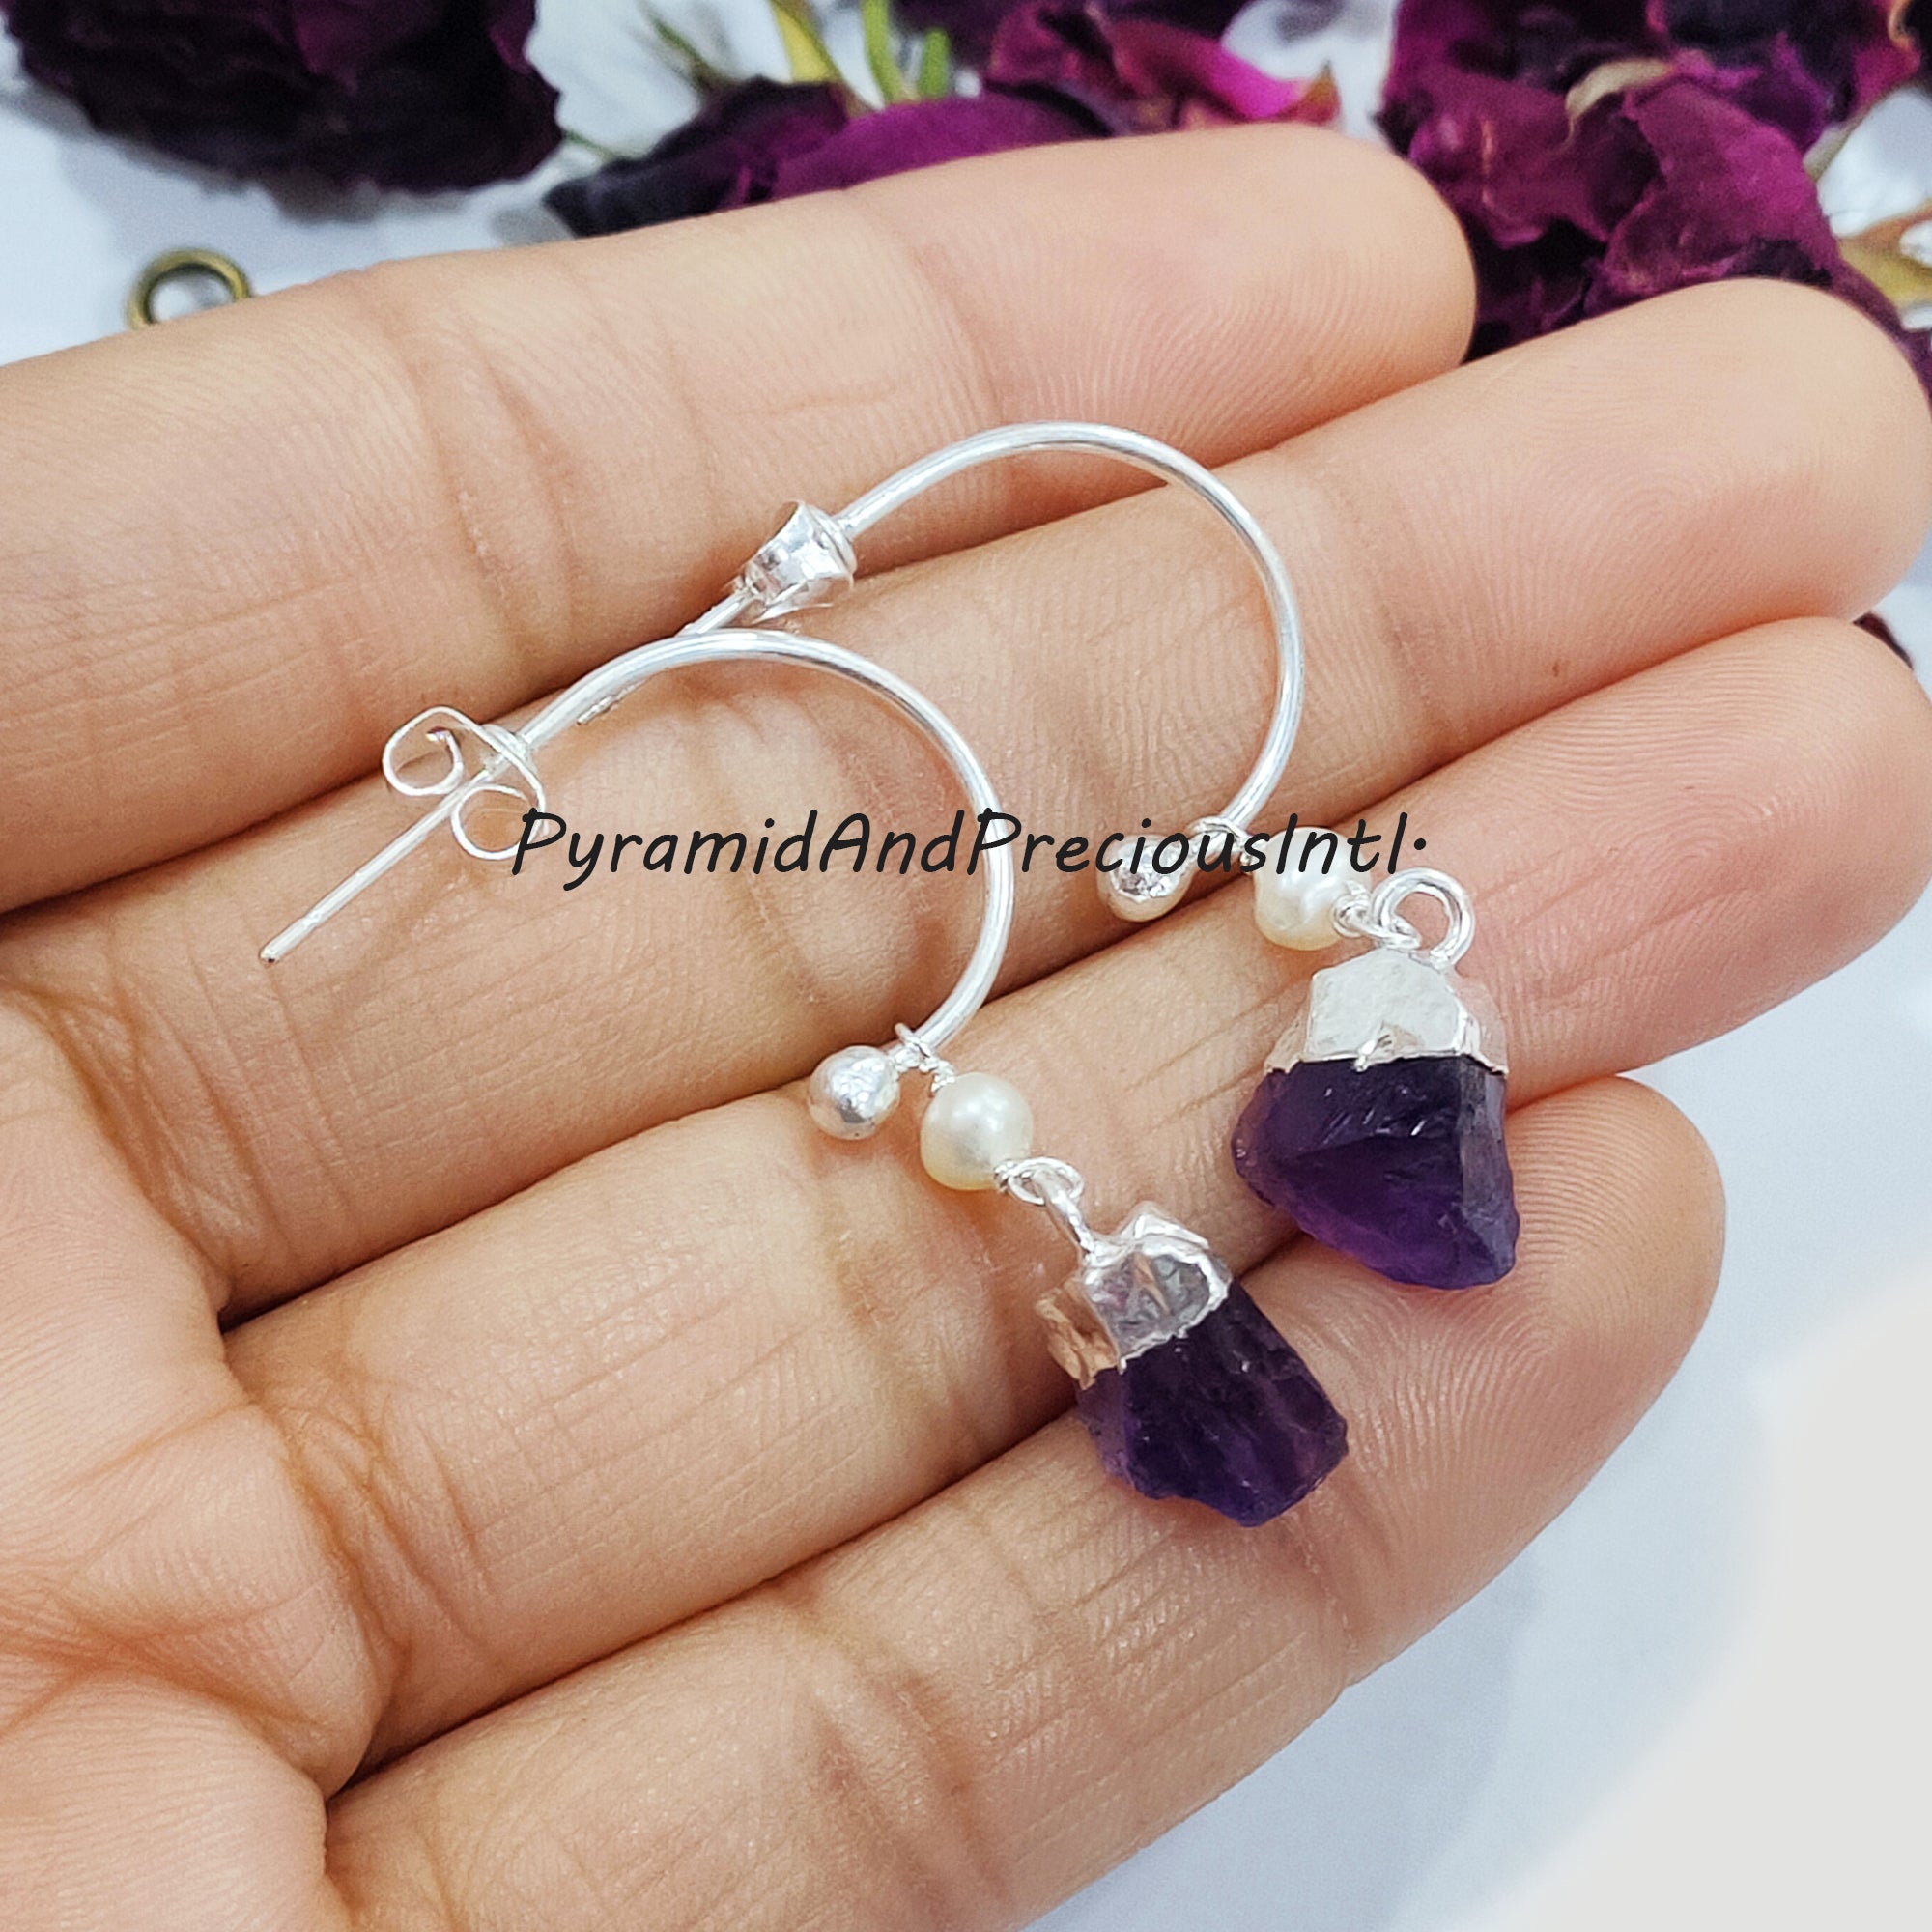 Raw Amethyst earring, Birthstone, Gift Idea, Gift for Girlfriend, Amethyst Jewelry